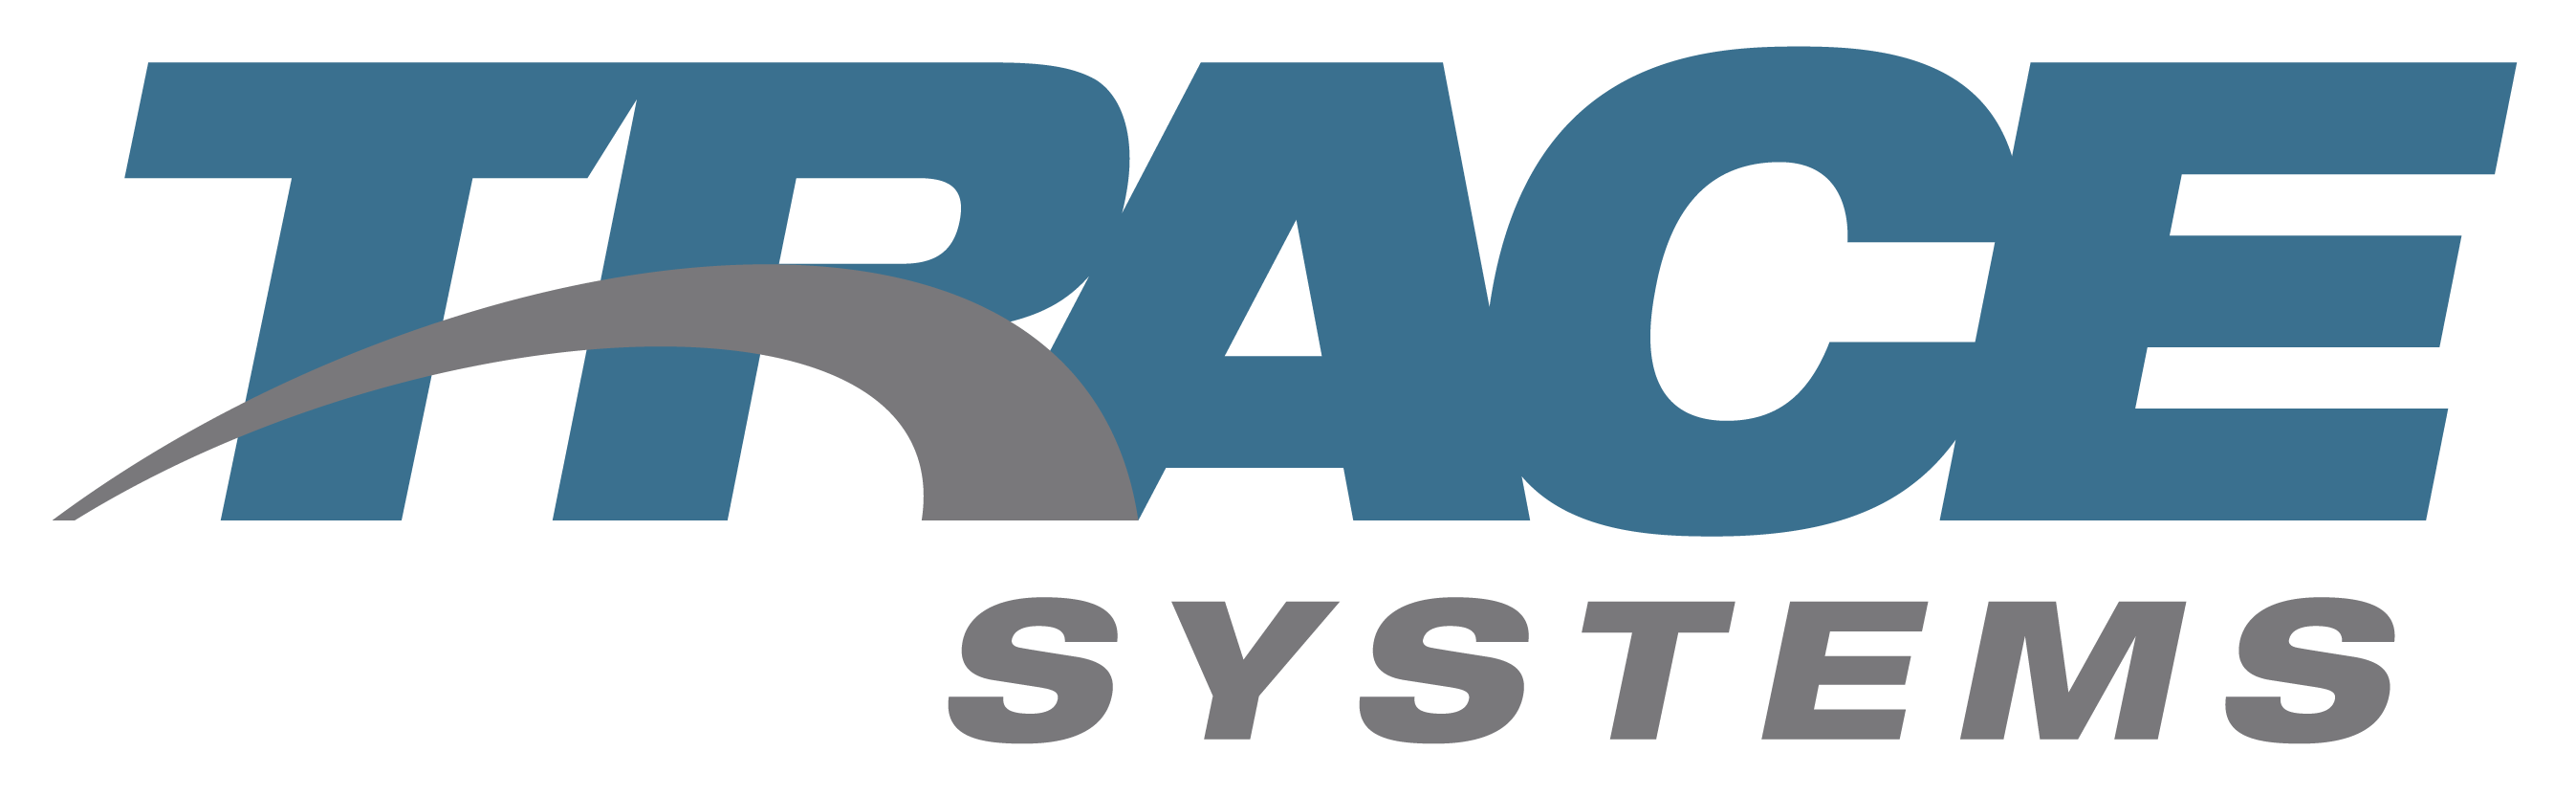 Trace Systems logo